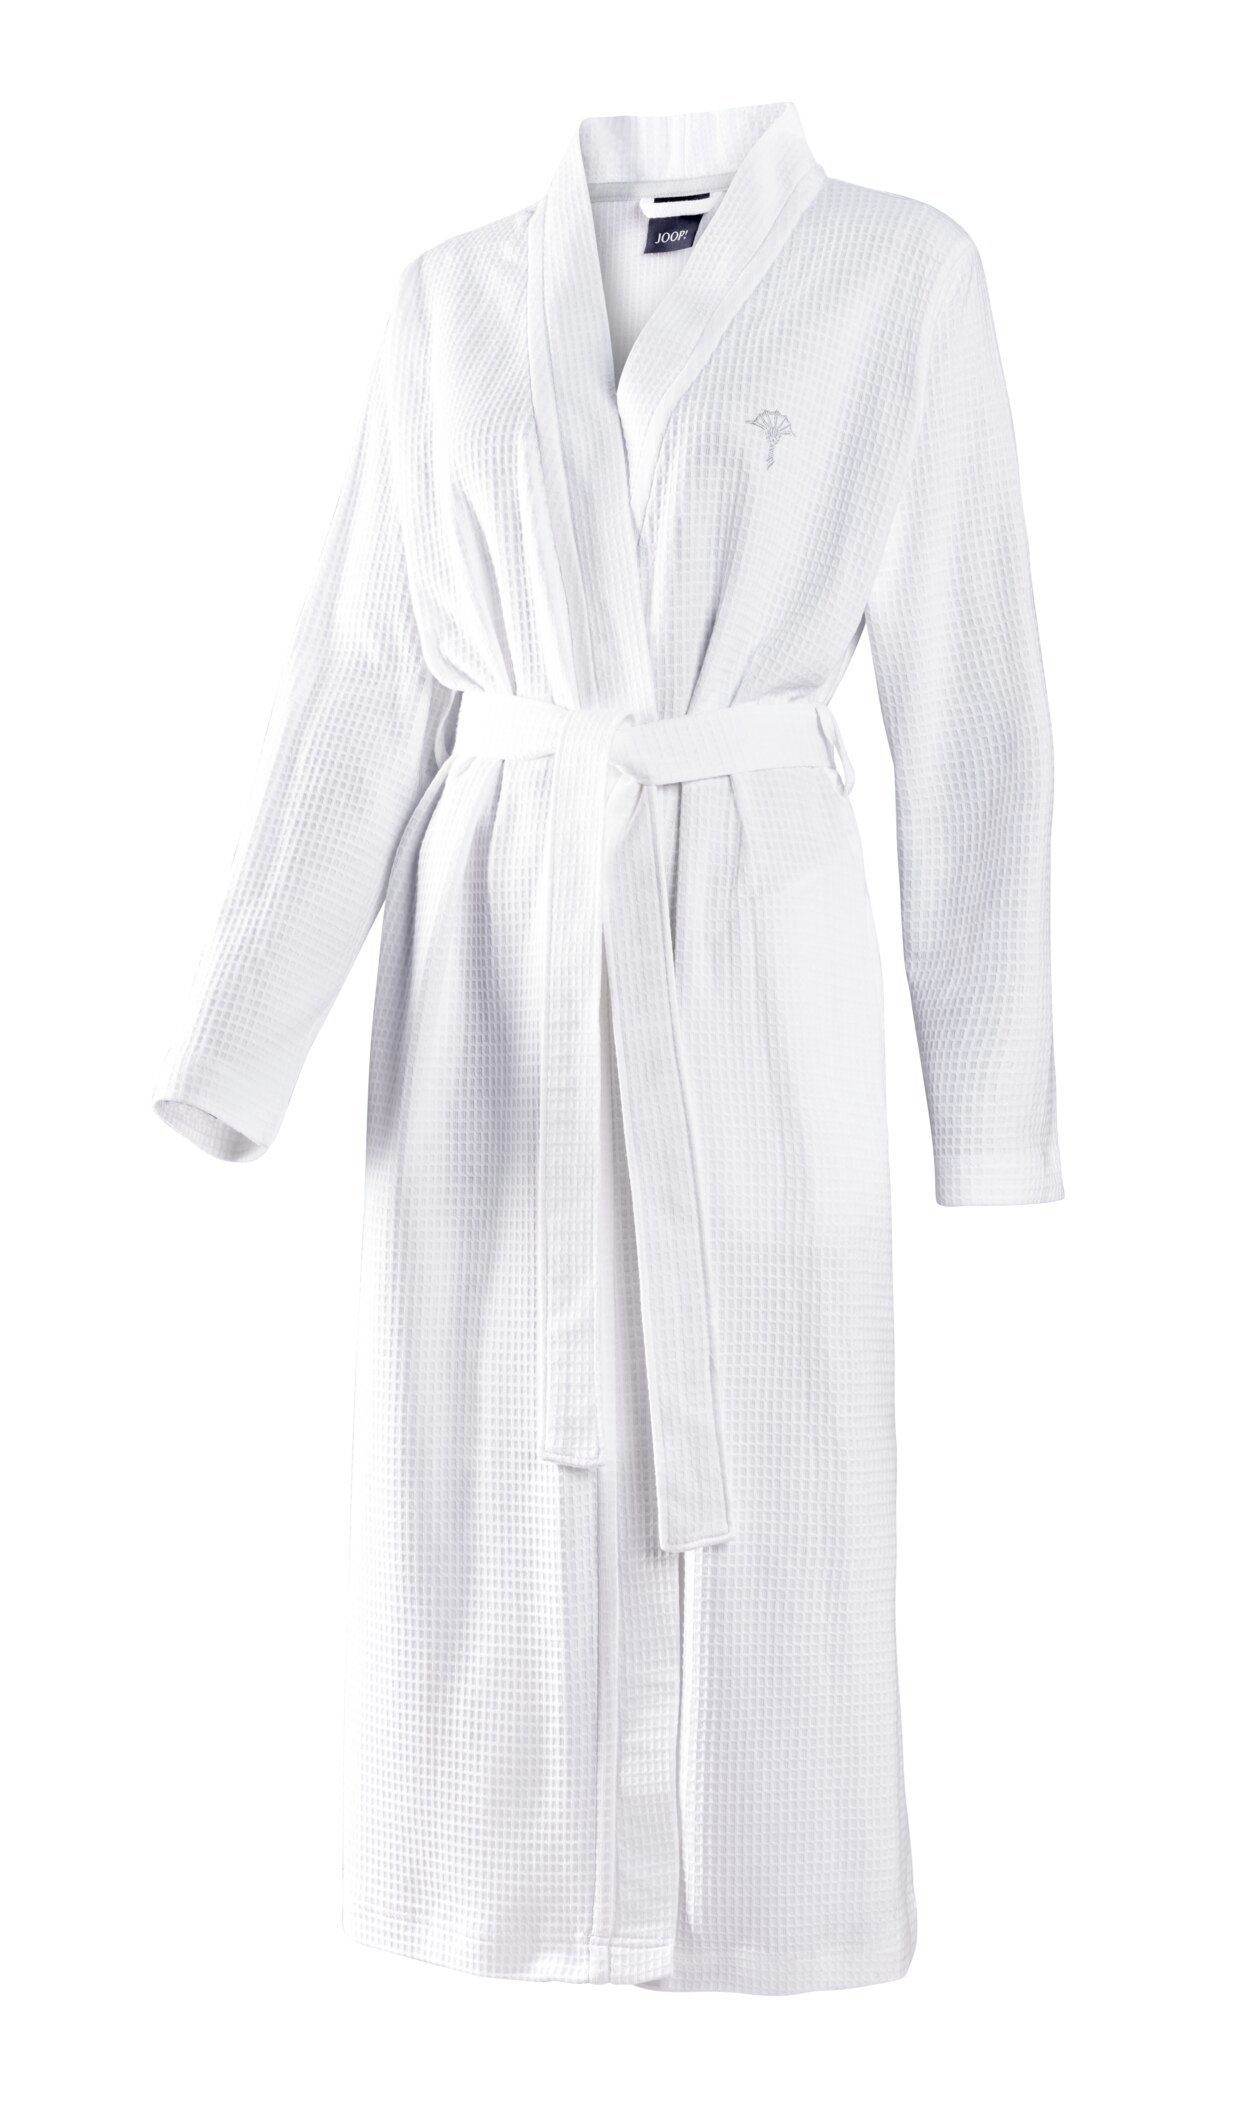 Textil Bademantel - PIQUÉ Weiß Damen-Kimono, Joop! UNI BADEMANTEL JOOP! LIVING